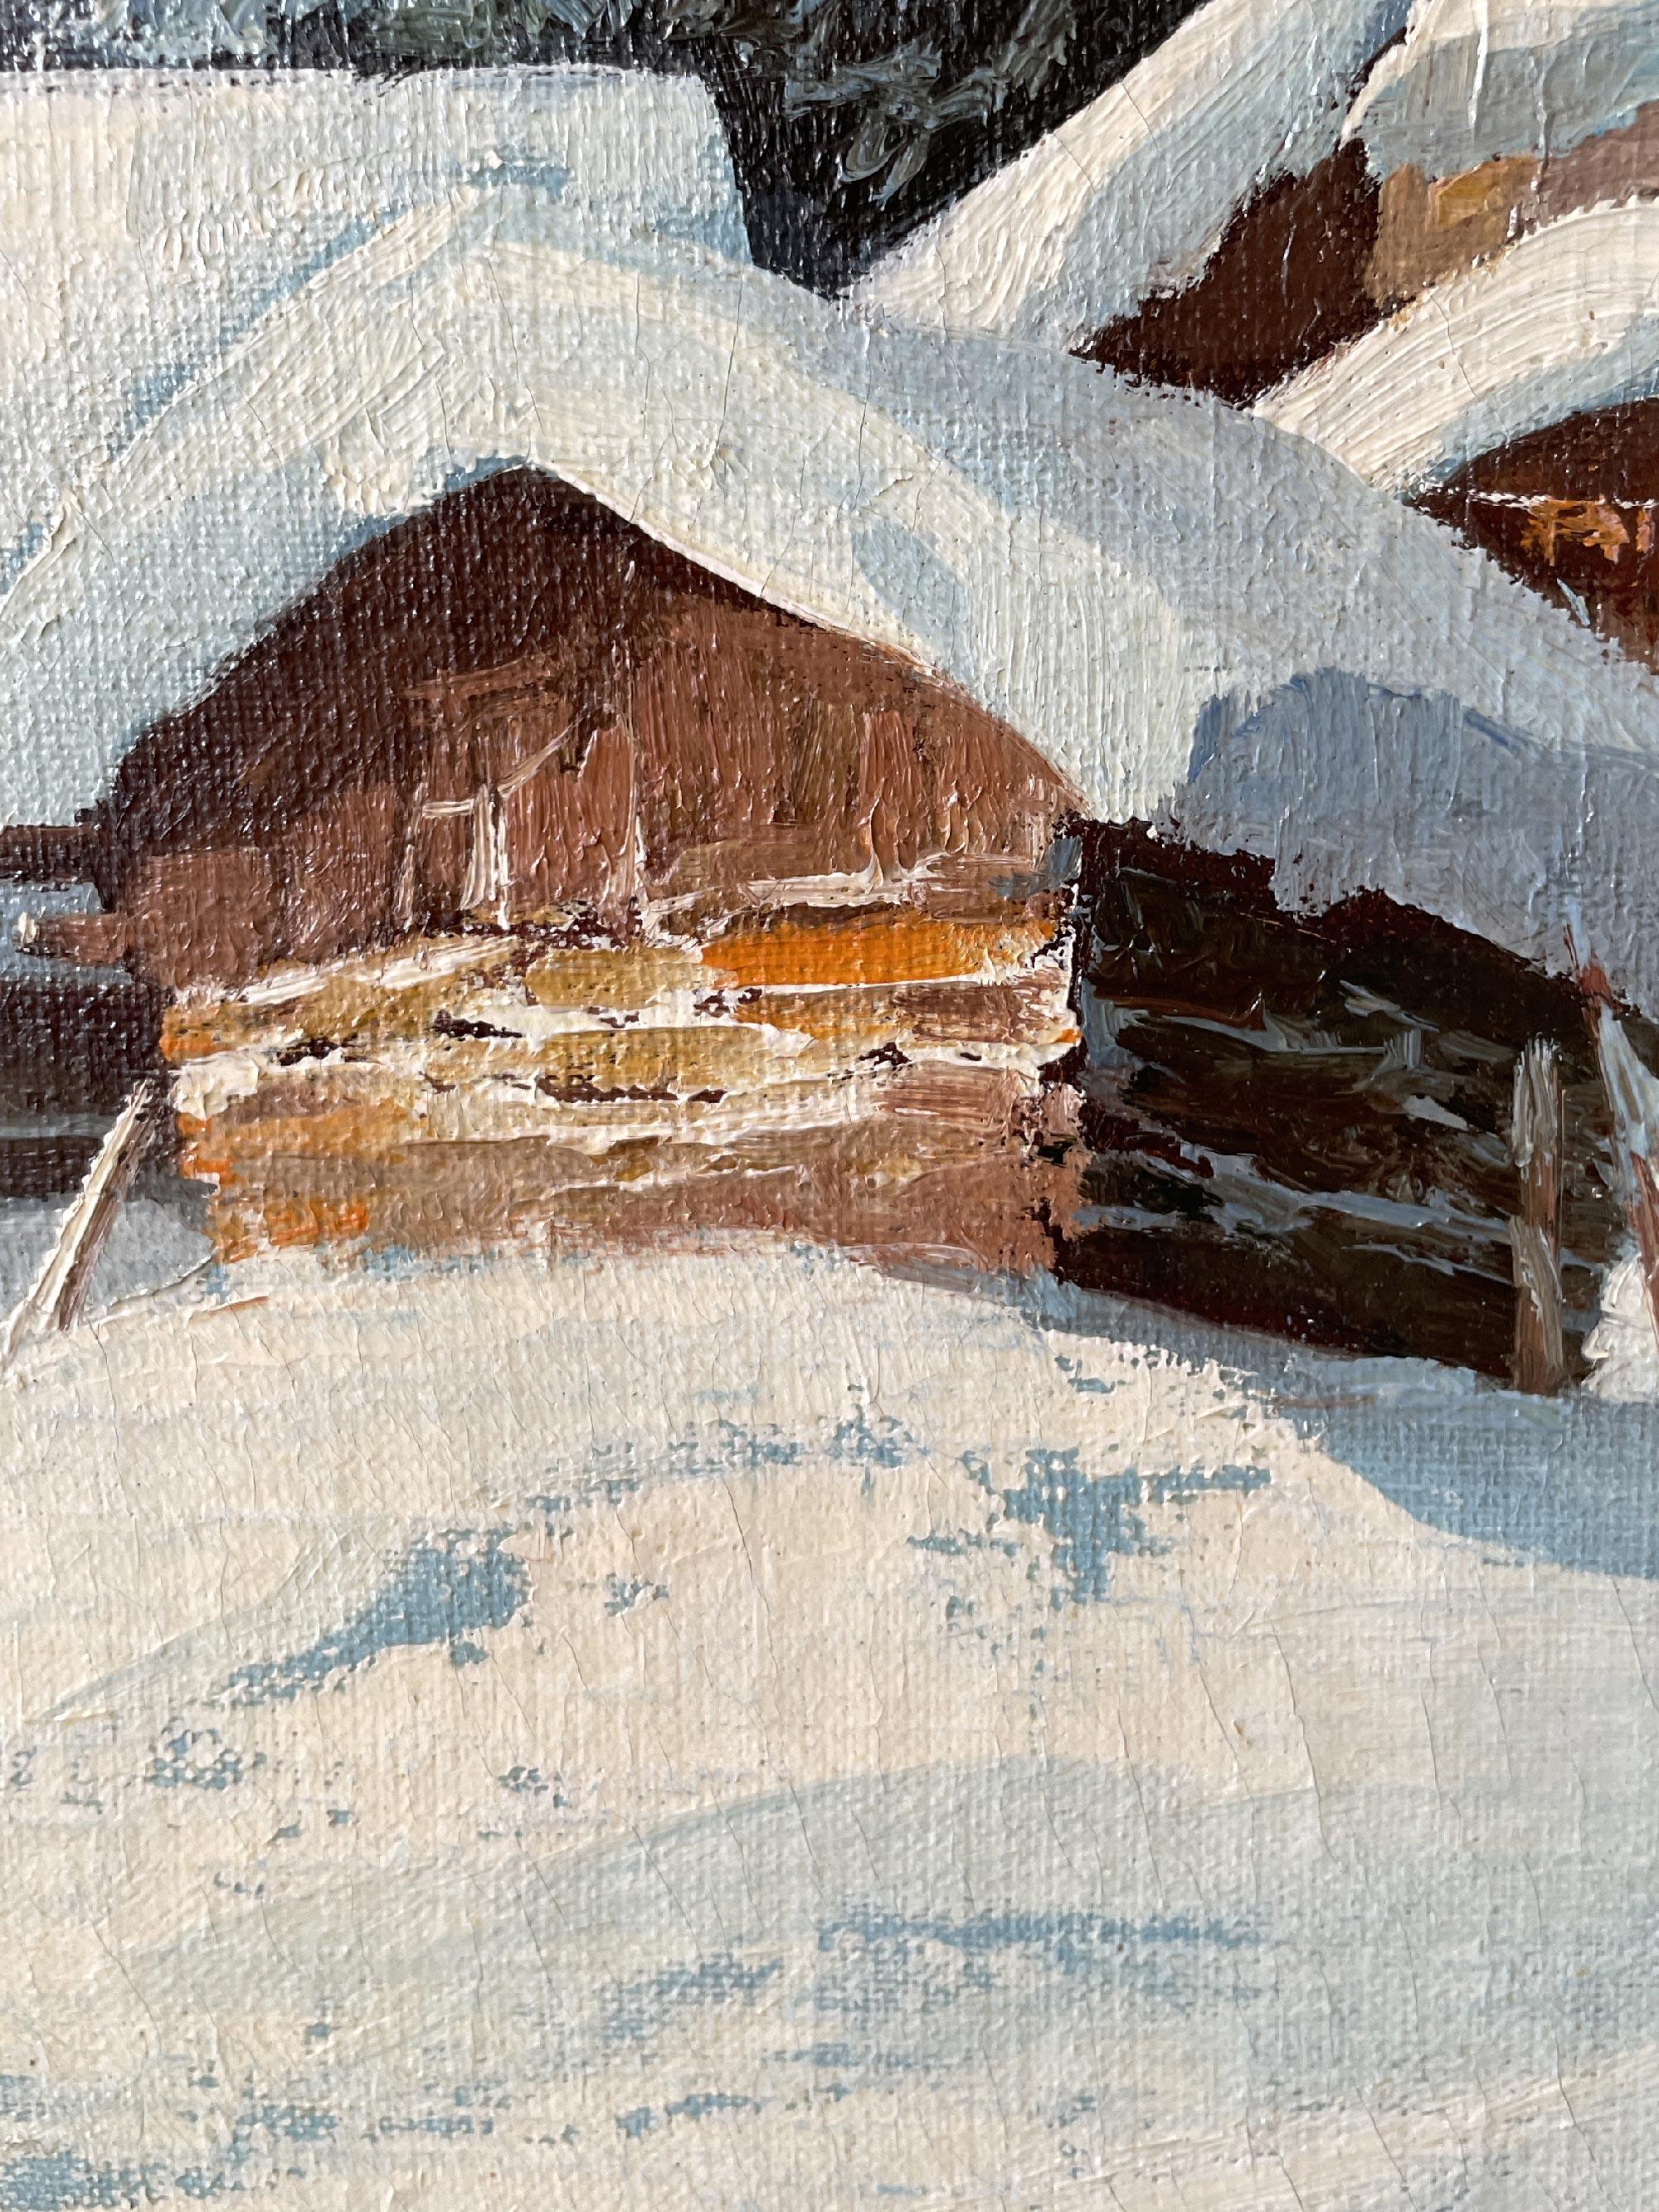 Oiled Snowy Landscape by Arno Lemke Oil on Canvas, 1950